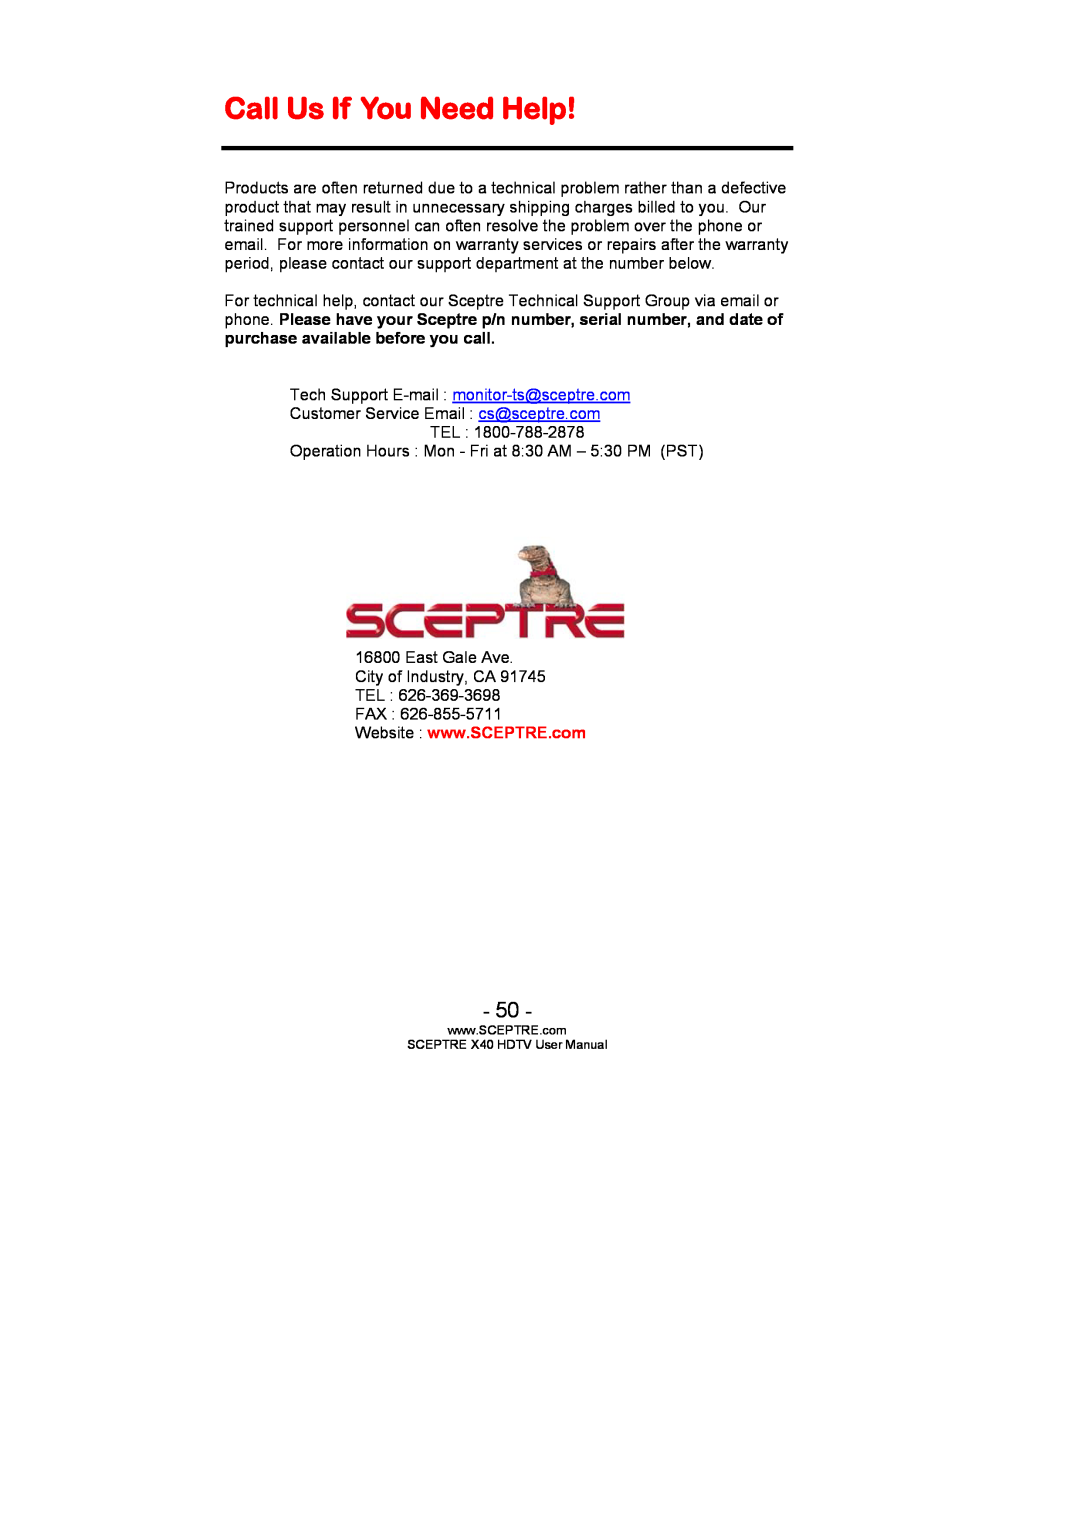 Sceptre Technologies SCEPTRE X40 HDTV user manual Call Us If You Need Help 